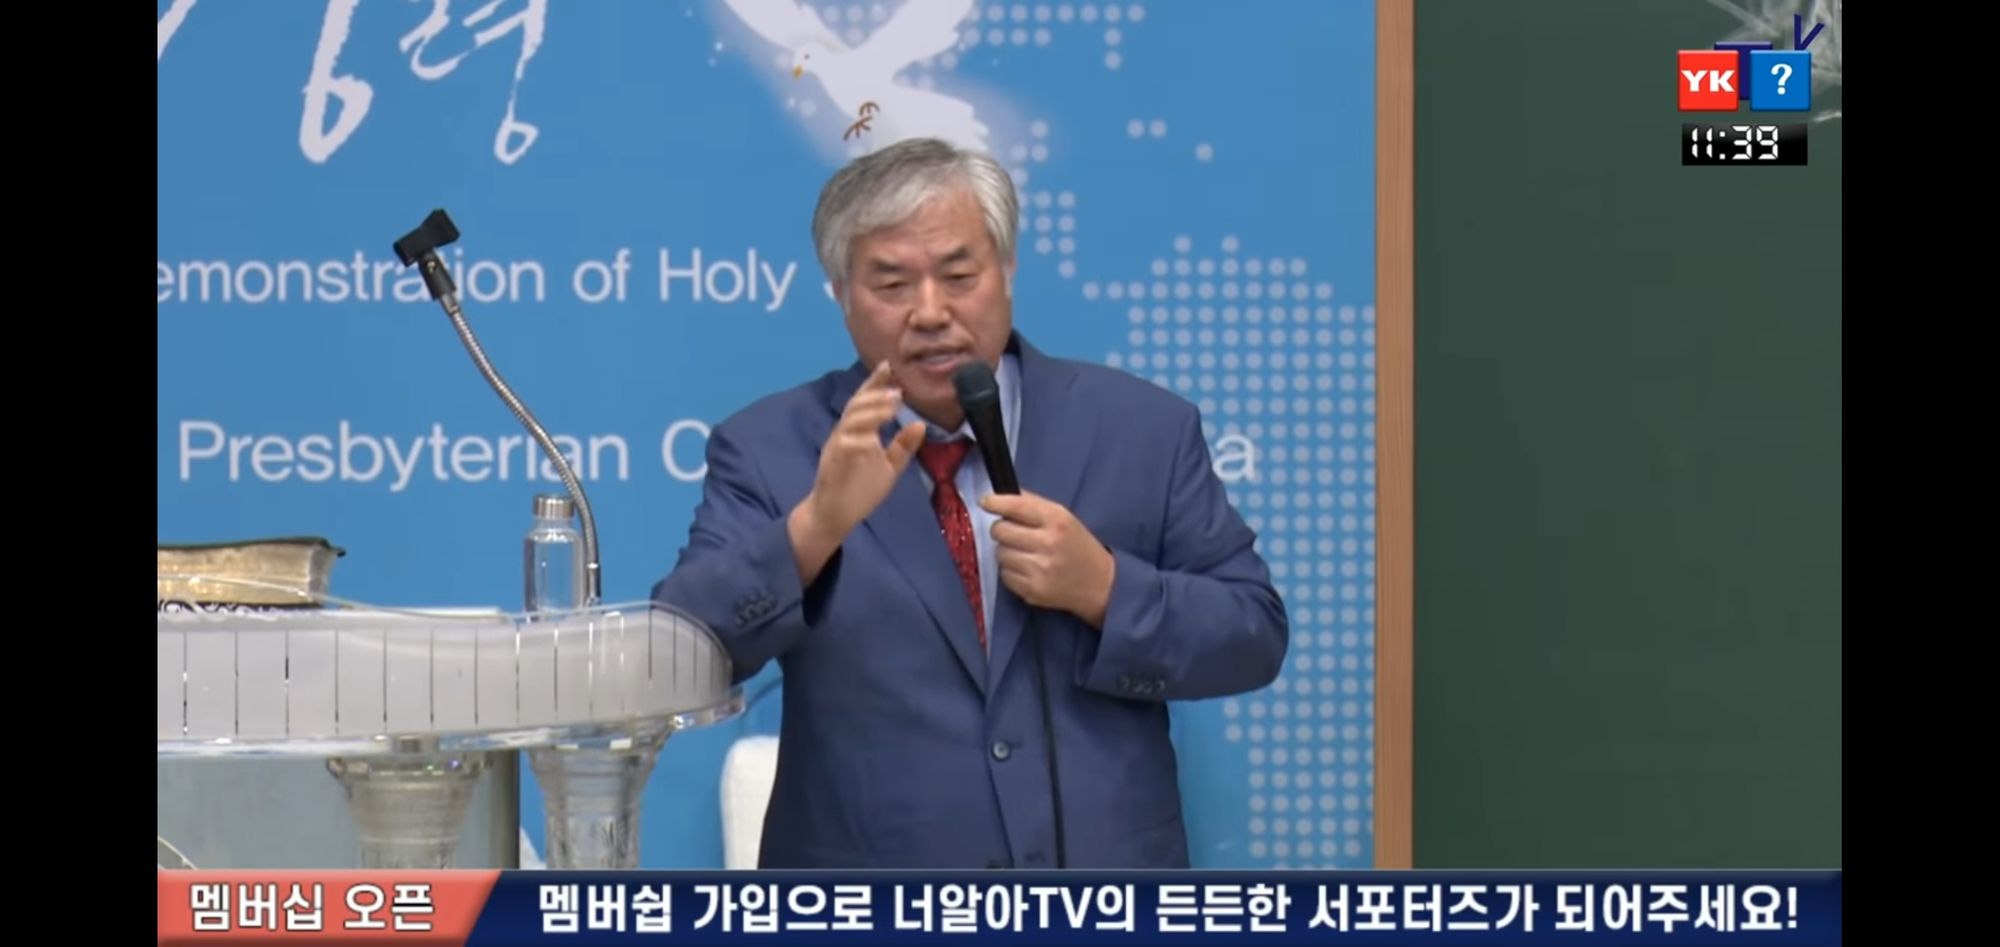 Jeon Gwang-hun: the Firebrand Conservative Pastor who Went (Literally) Viral